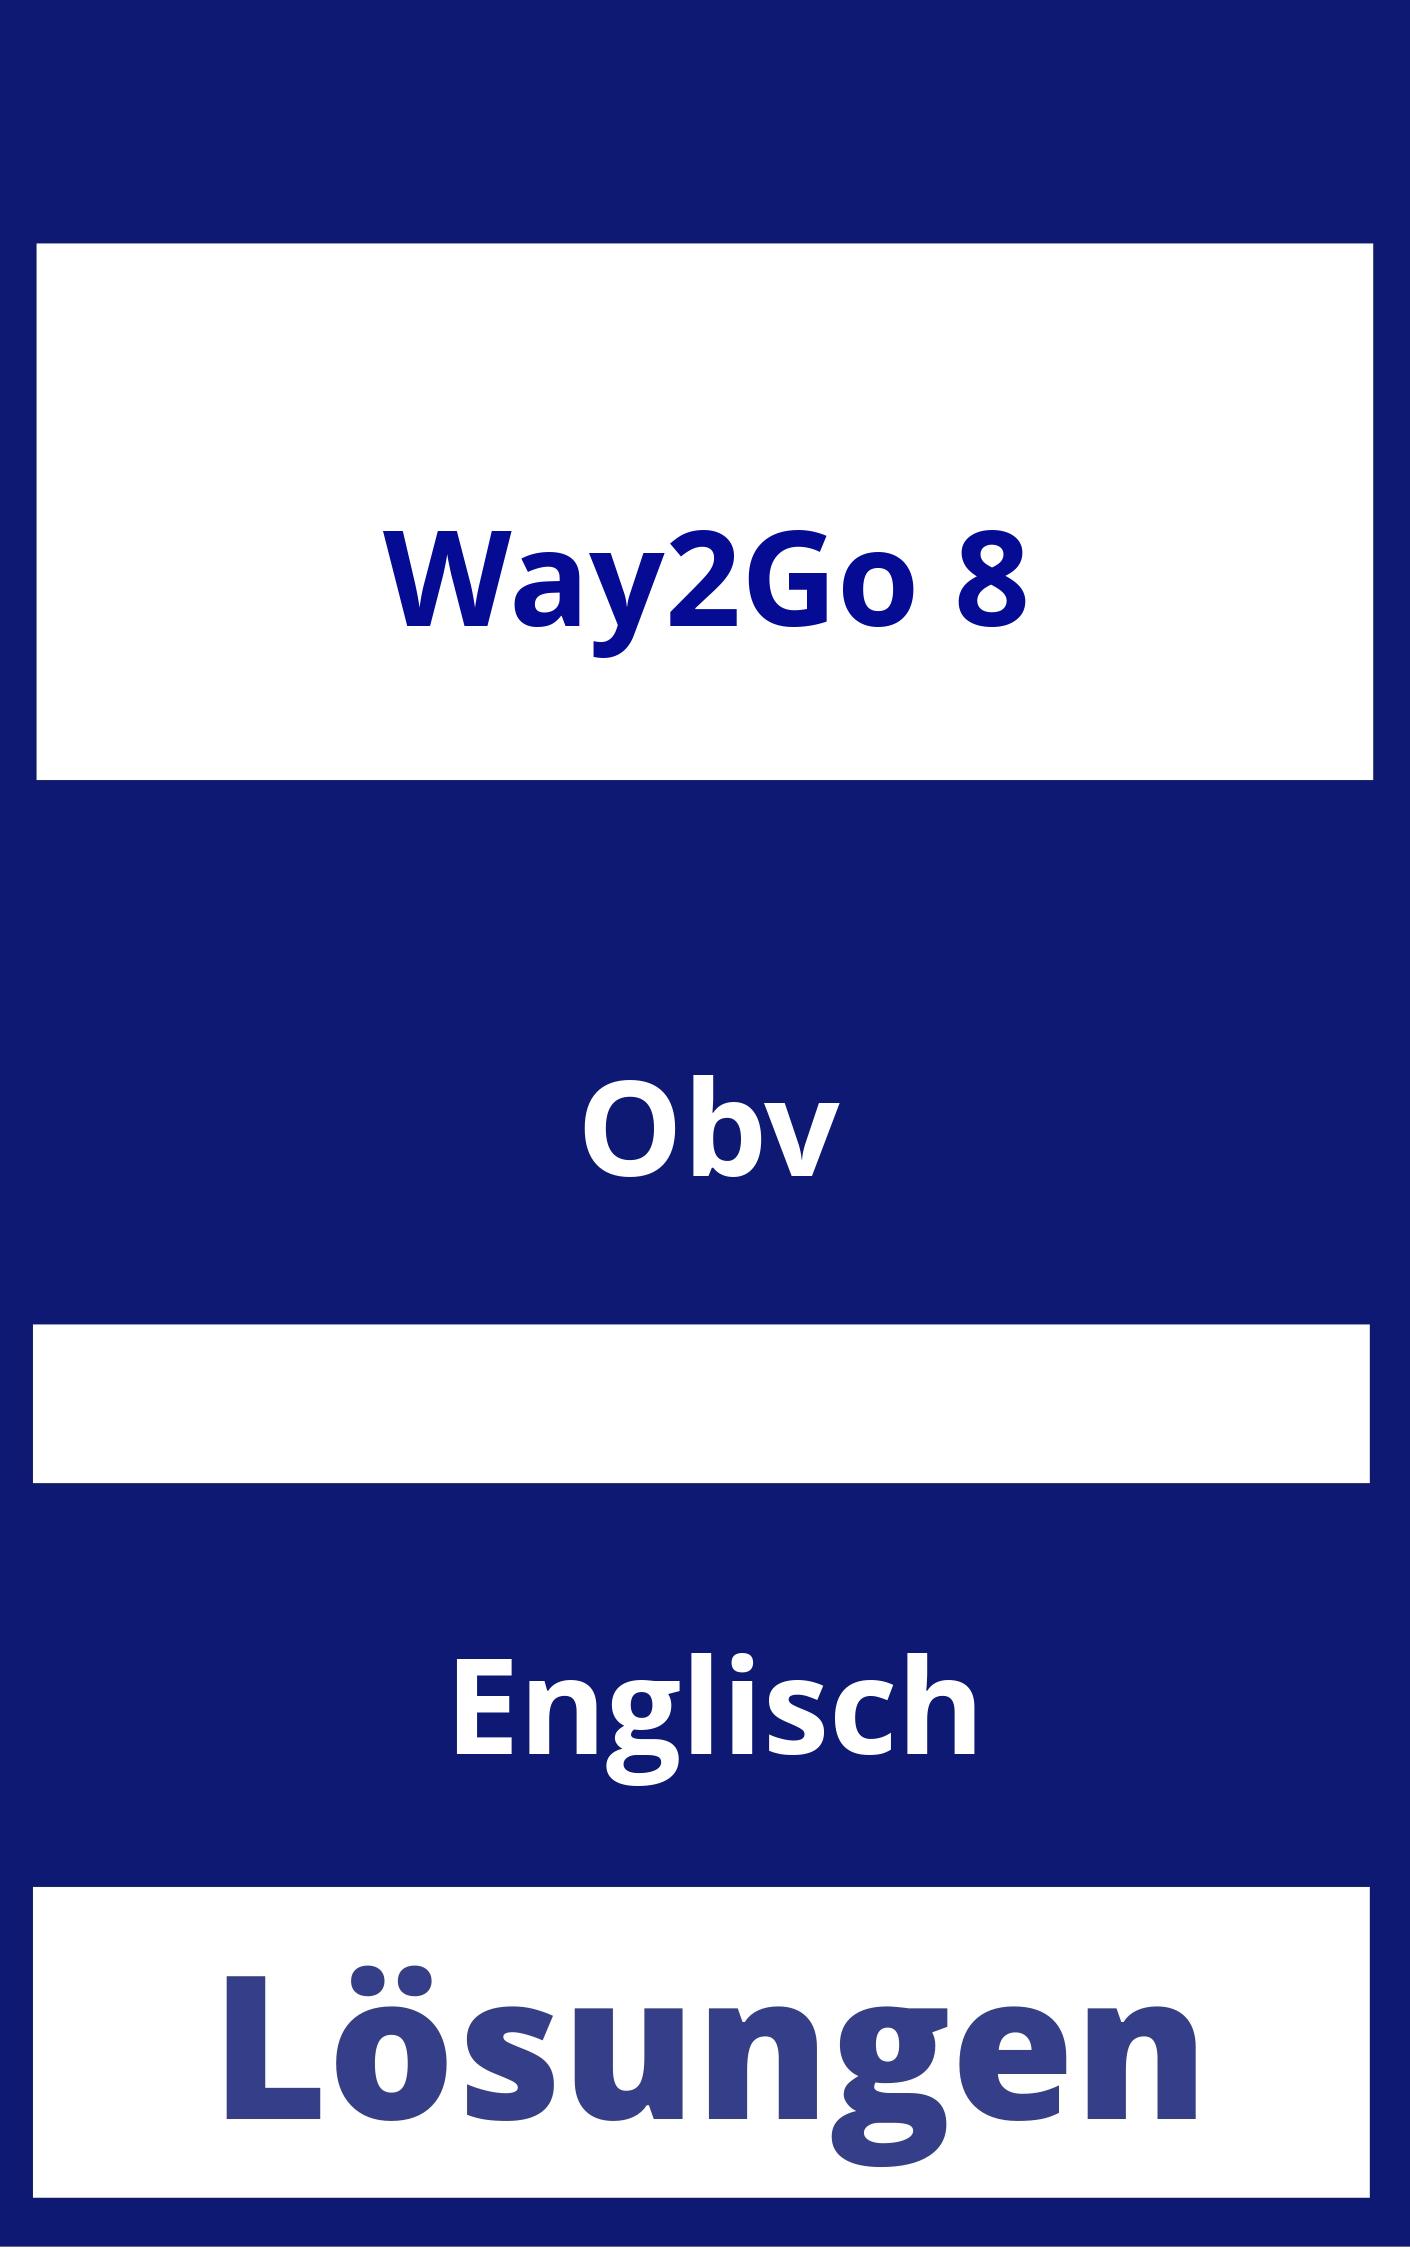 Way2go 8